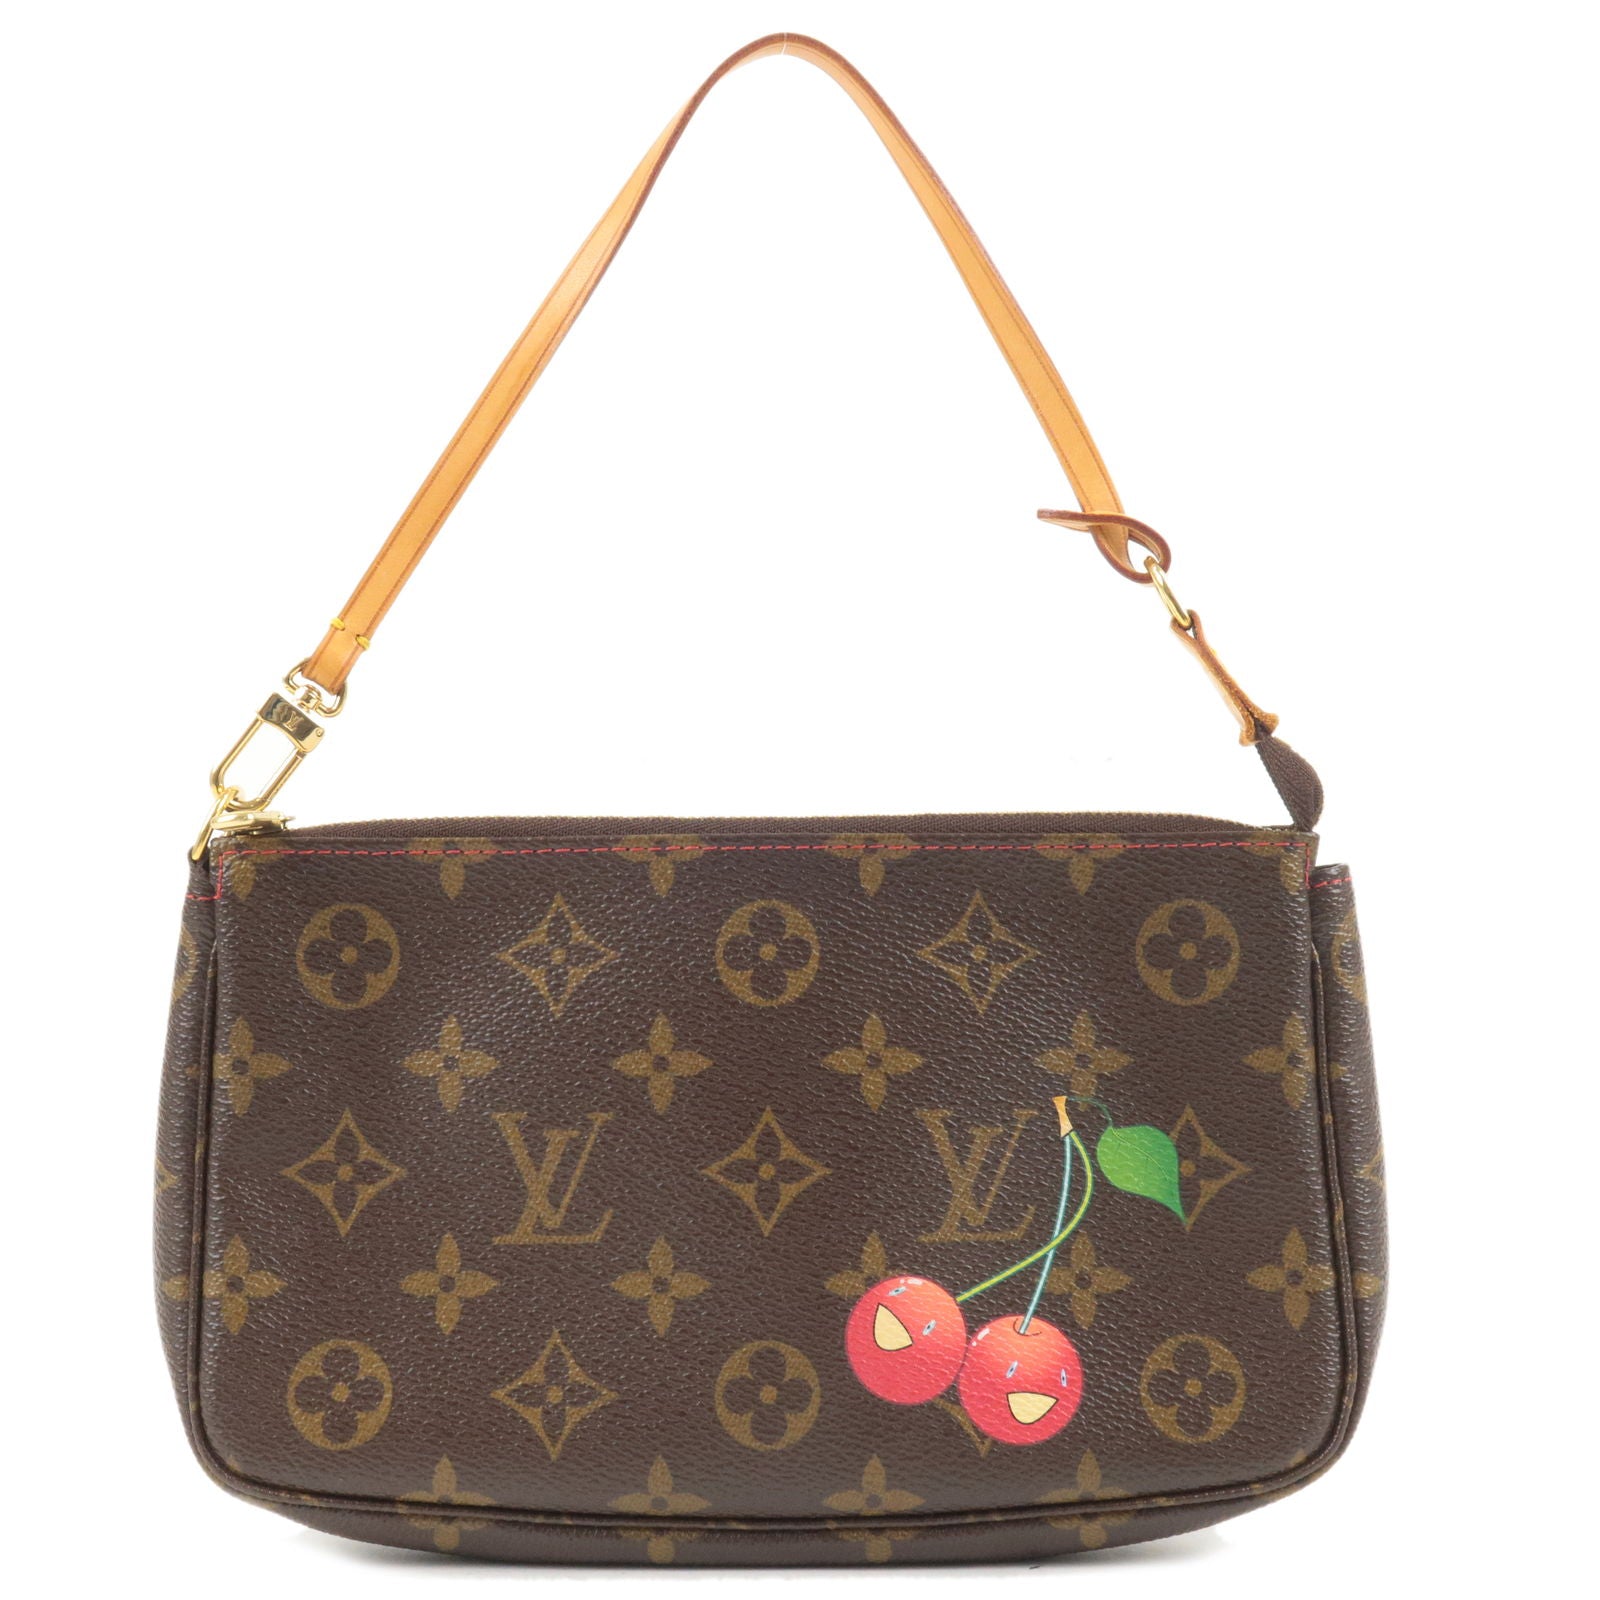 How to Spot Louis Vuitton Murakami Cherry Blossom Monogram Bag